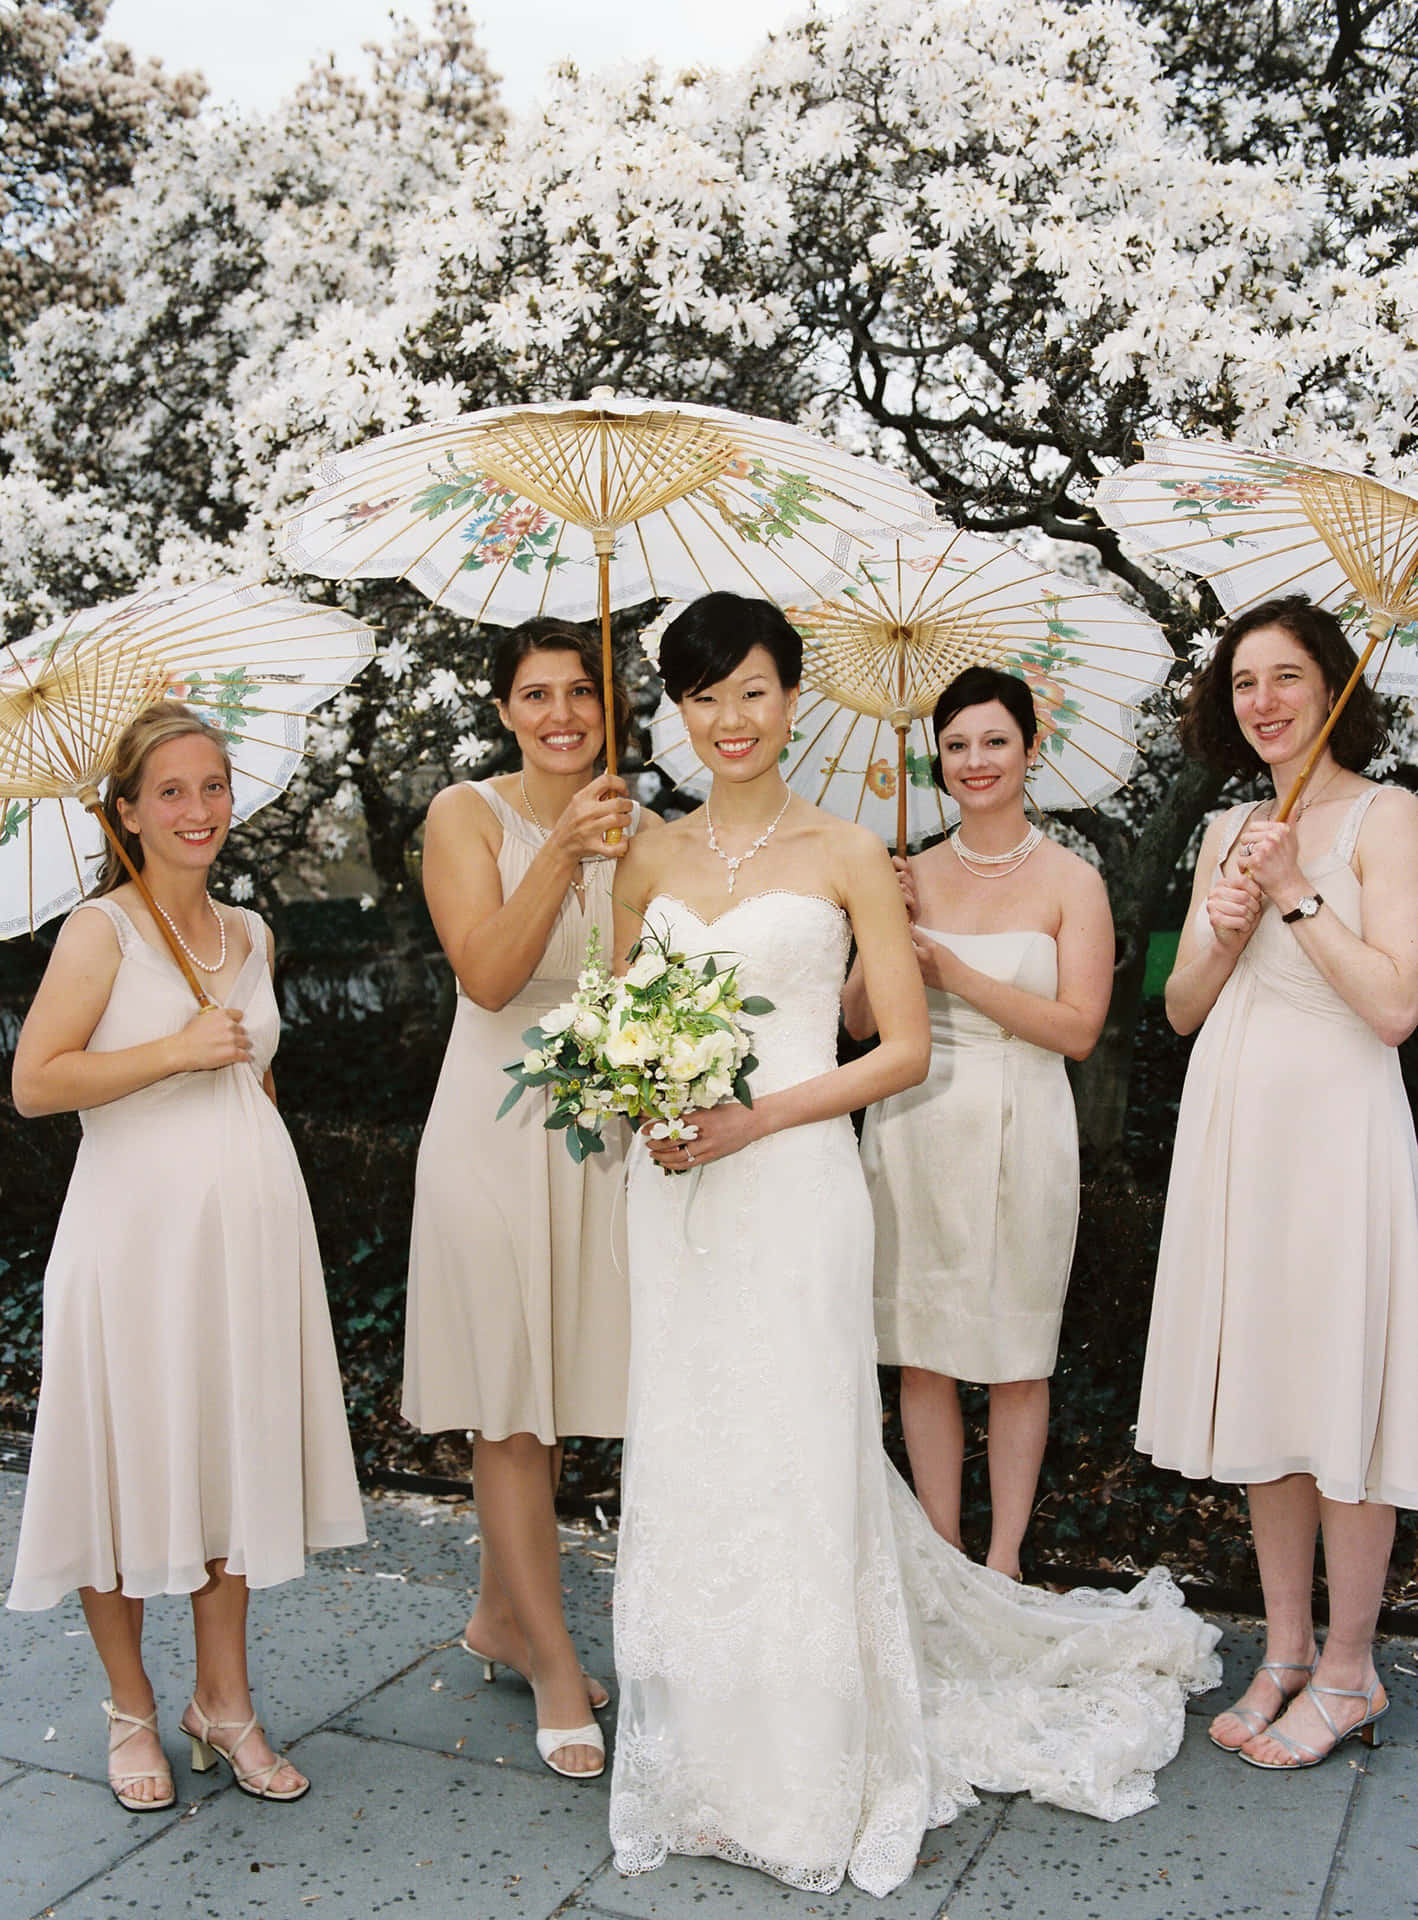 Bride And Bridesmaids With Umbrellas Picture